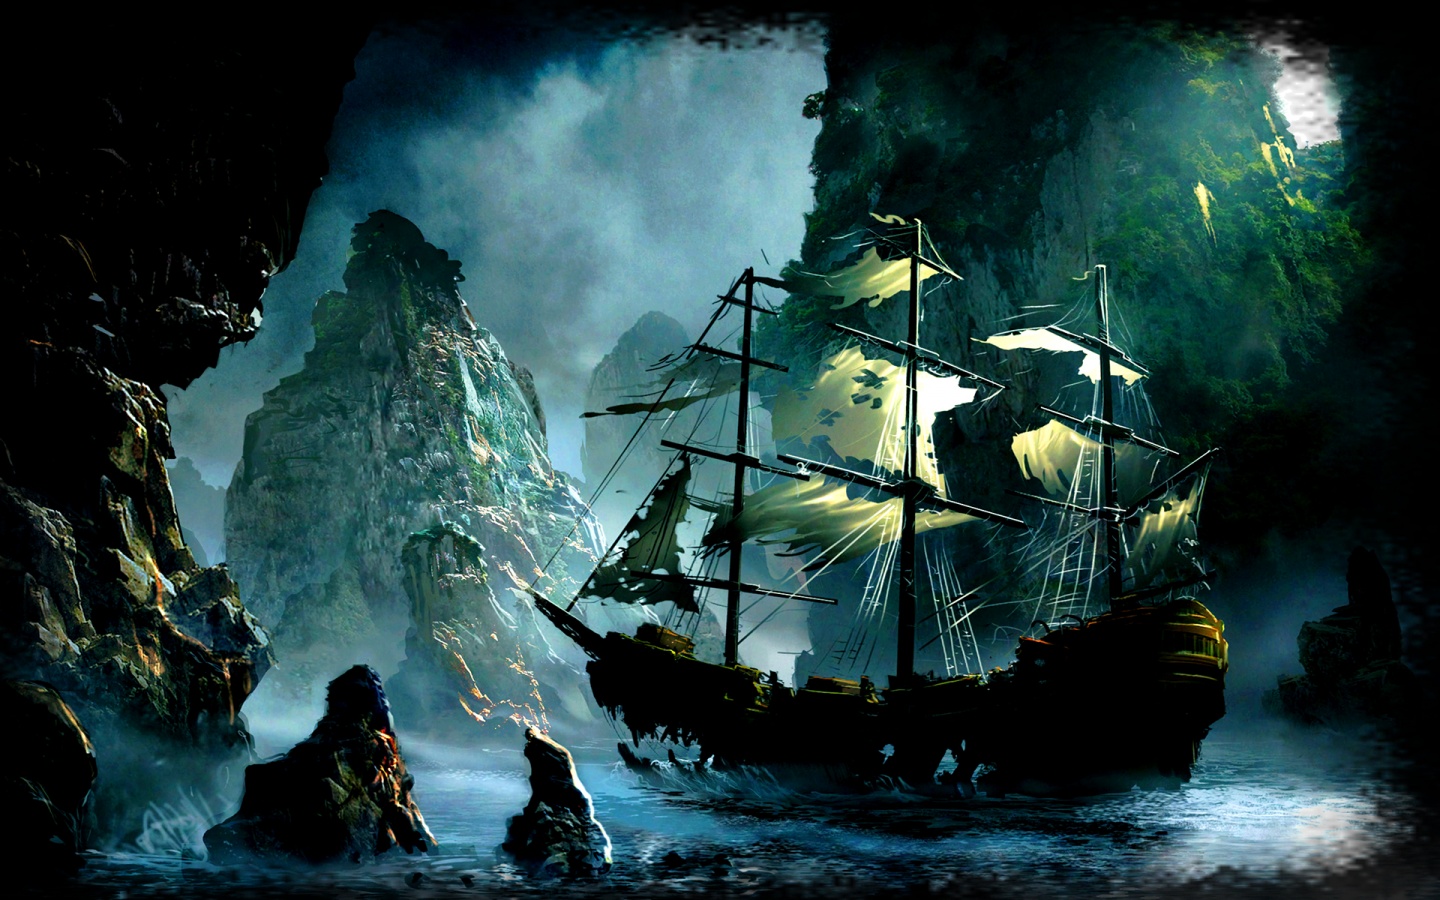 Tags sea ship rocks fantasy world imaginary pirate ship ghost ship